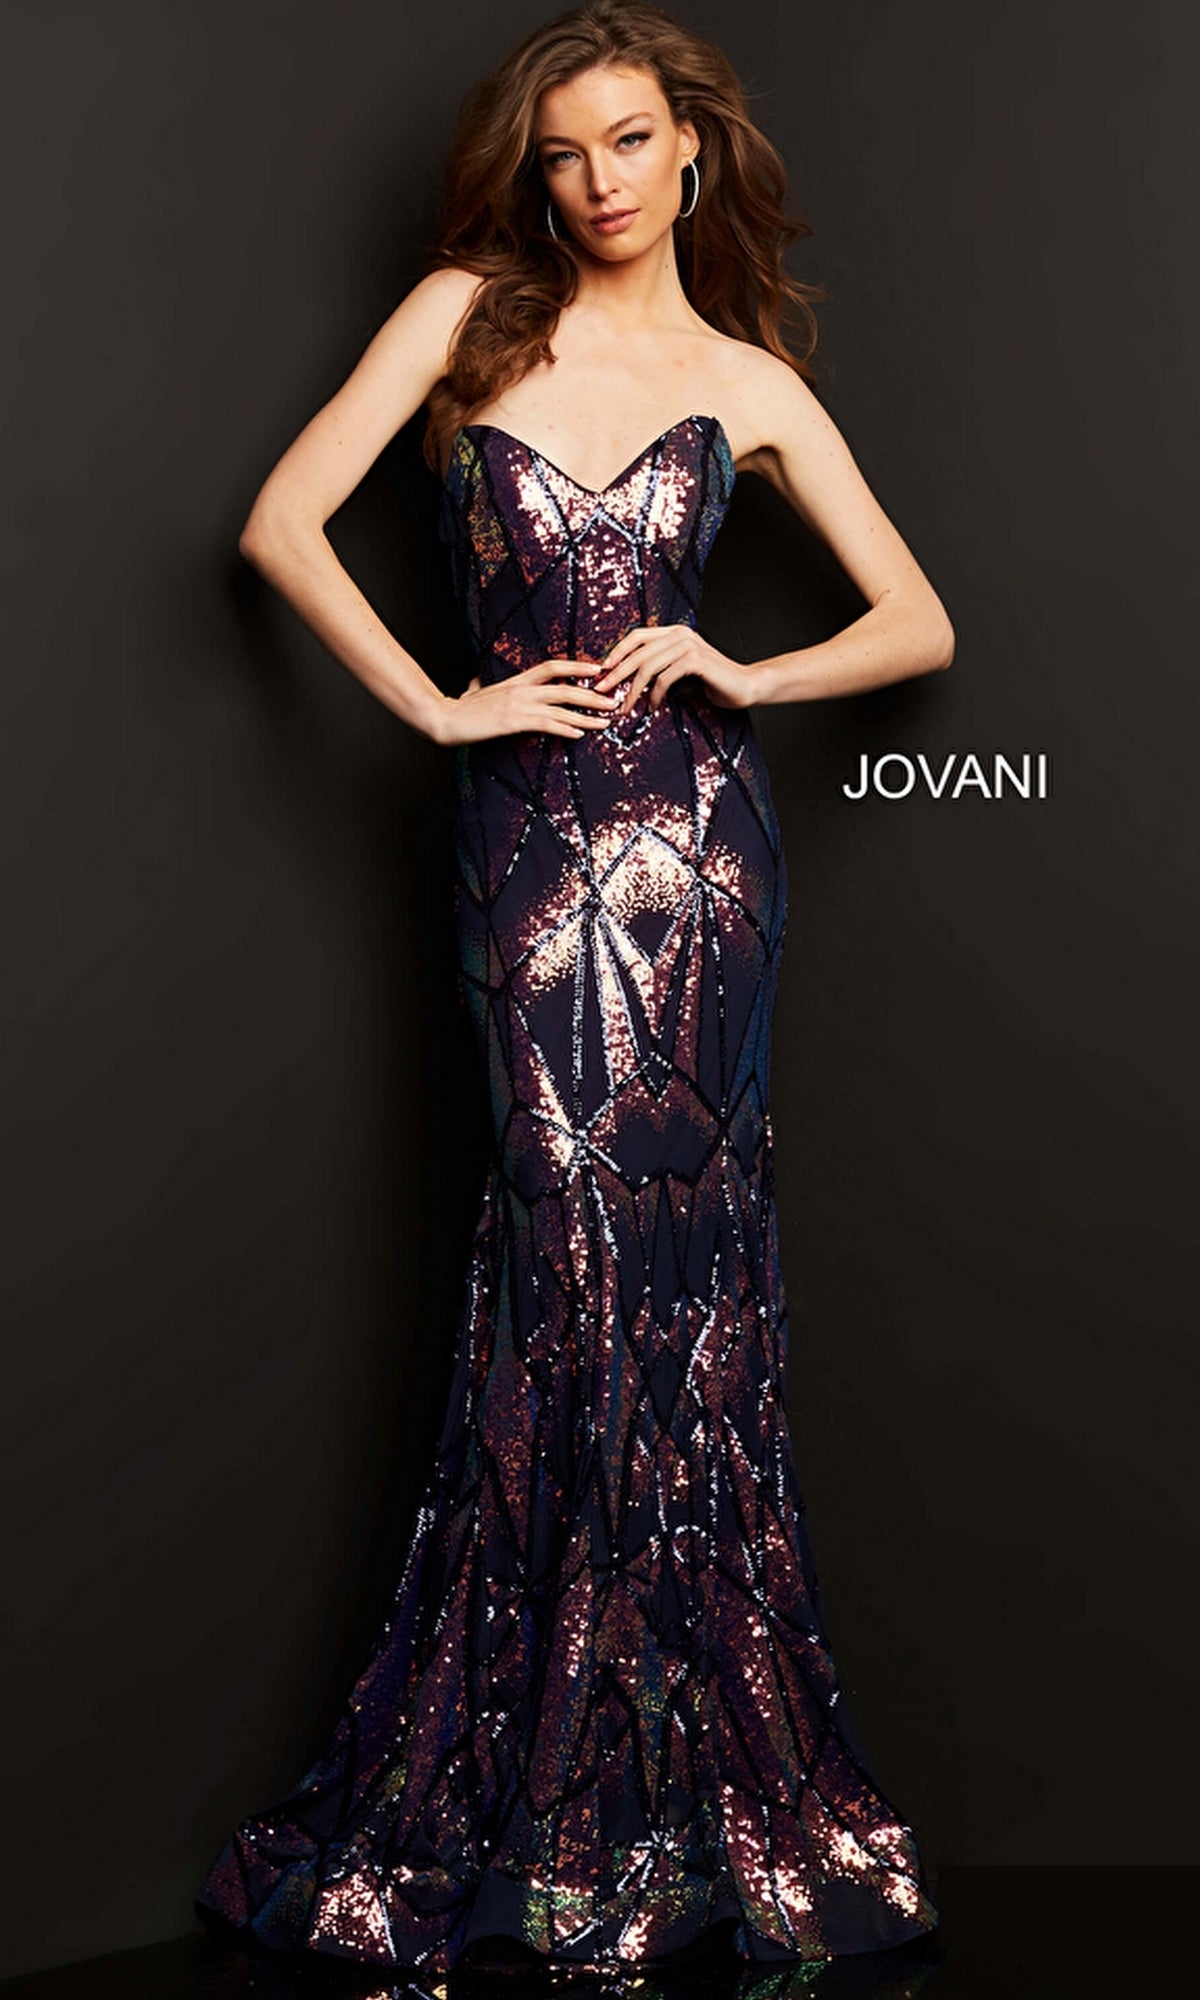 Long Prom Dress by Jovani 05100